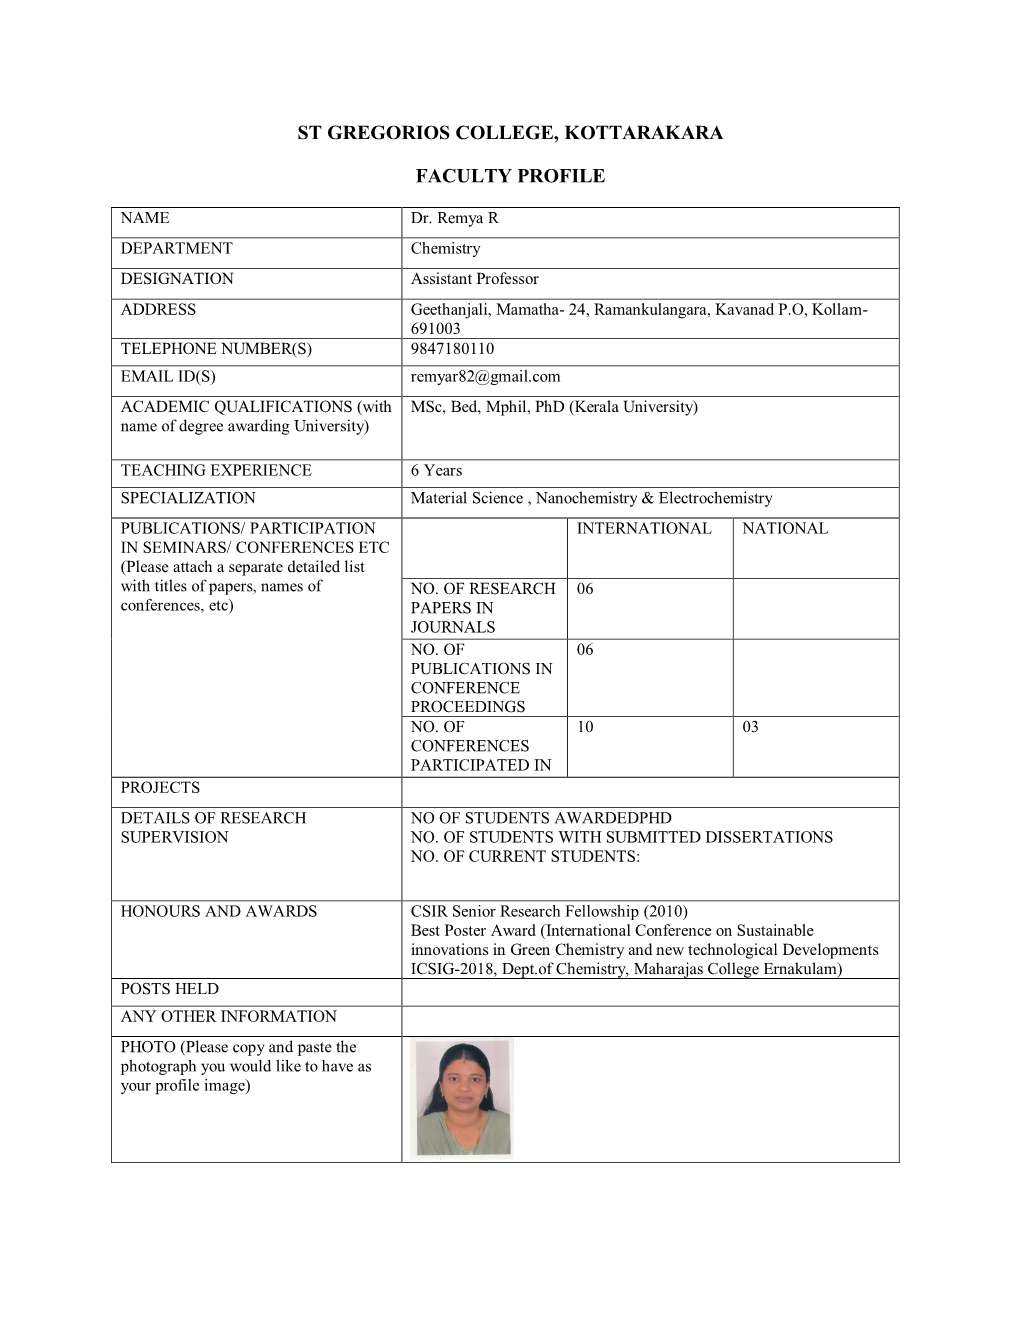 St Gregorios College, Kottarakara Faculty Profile